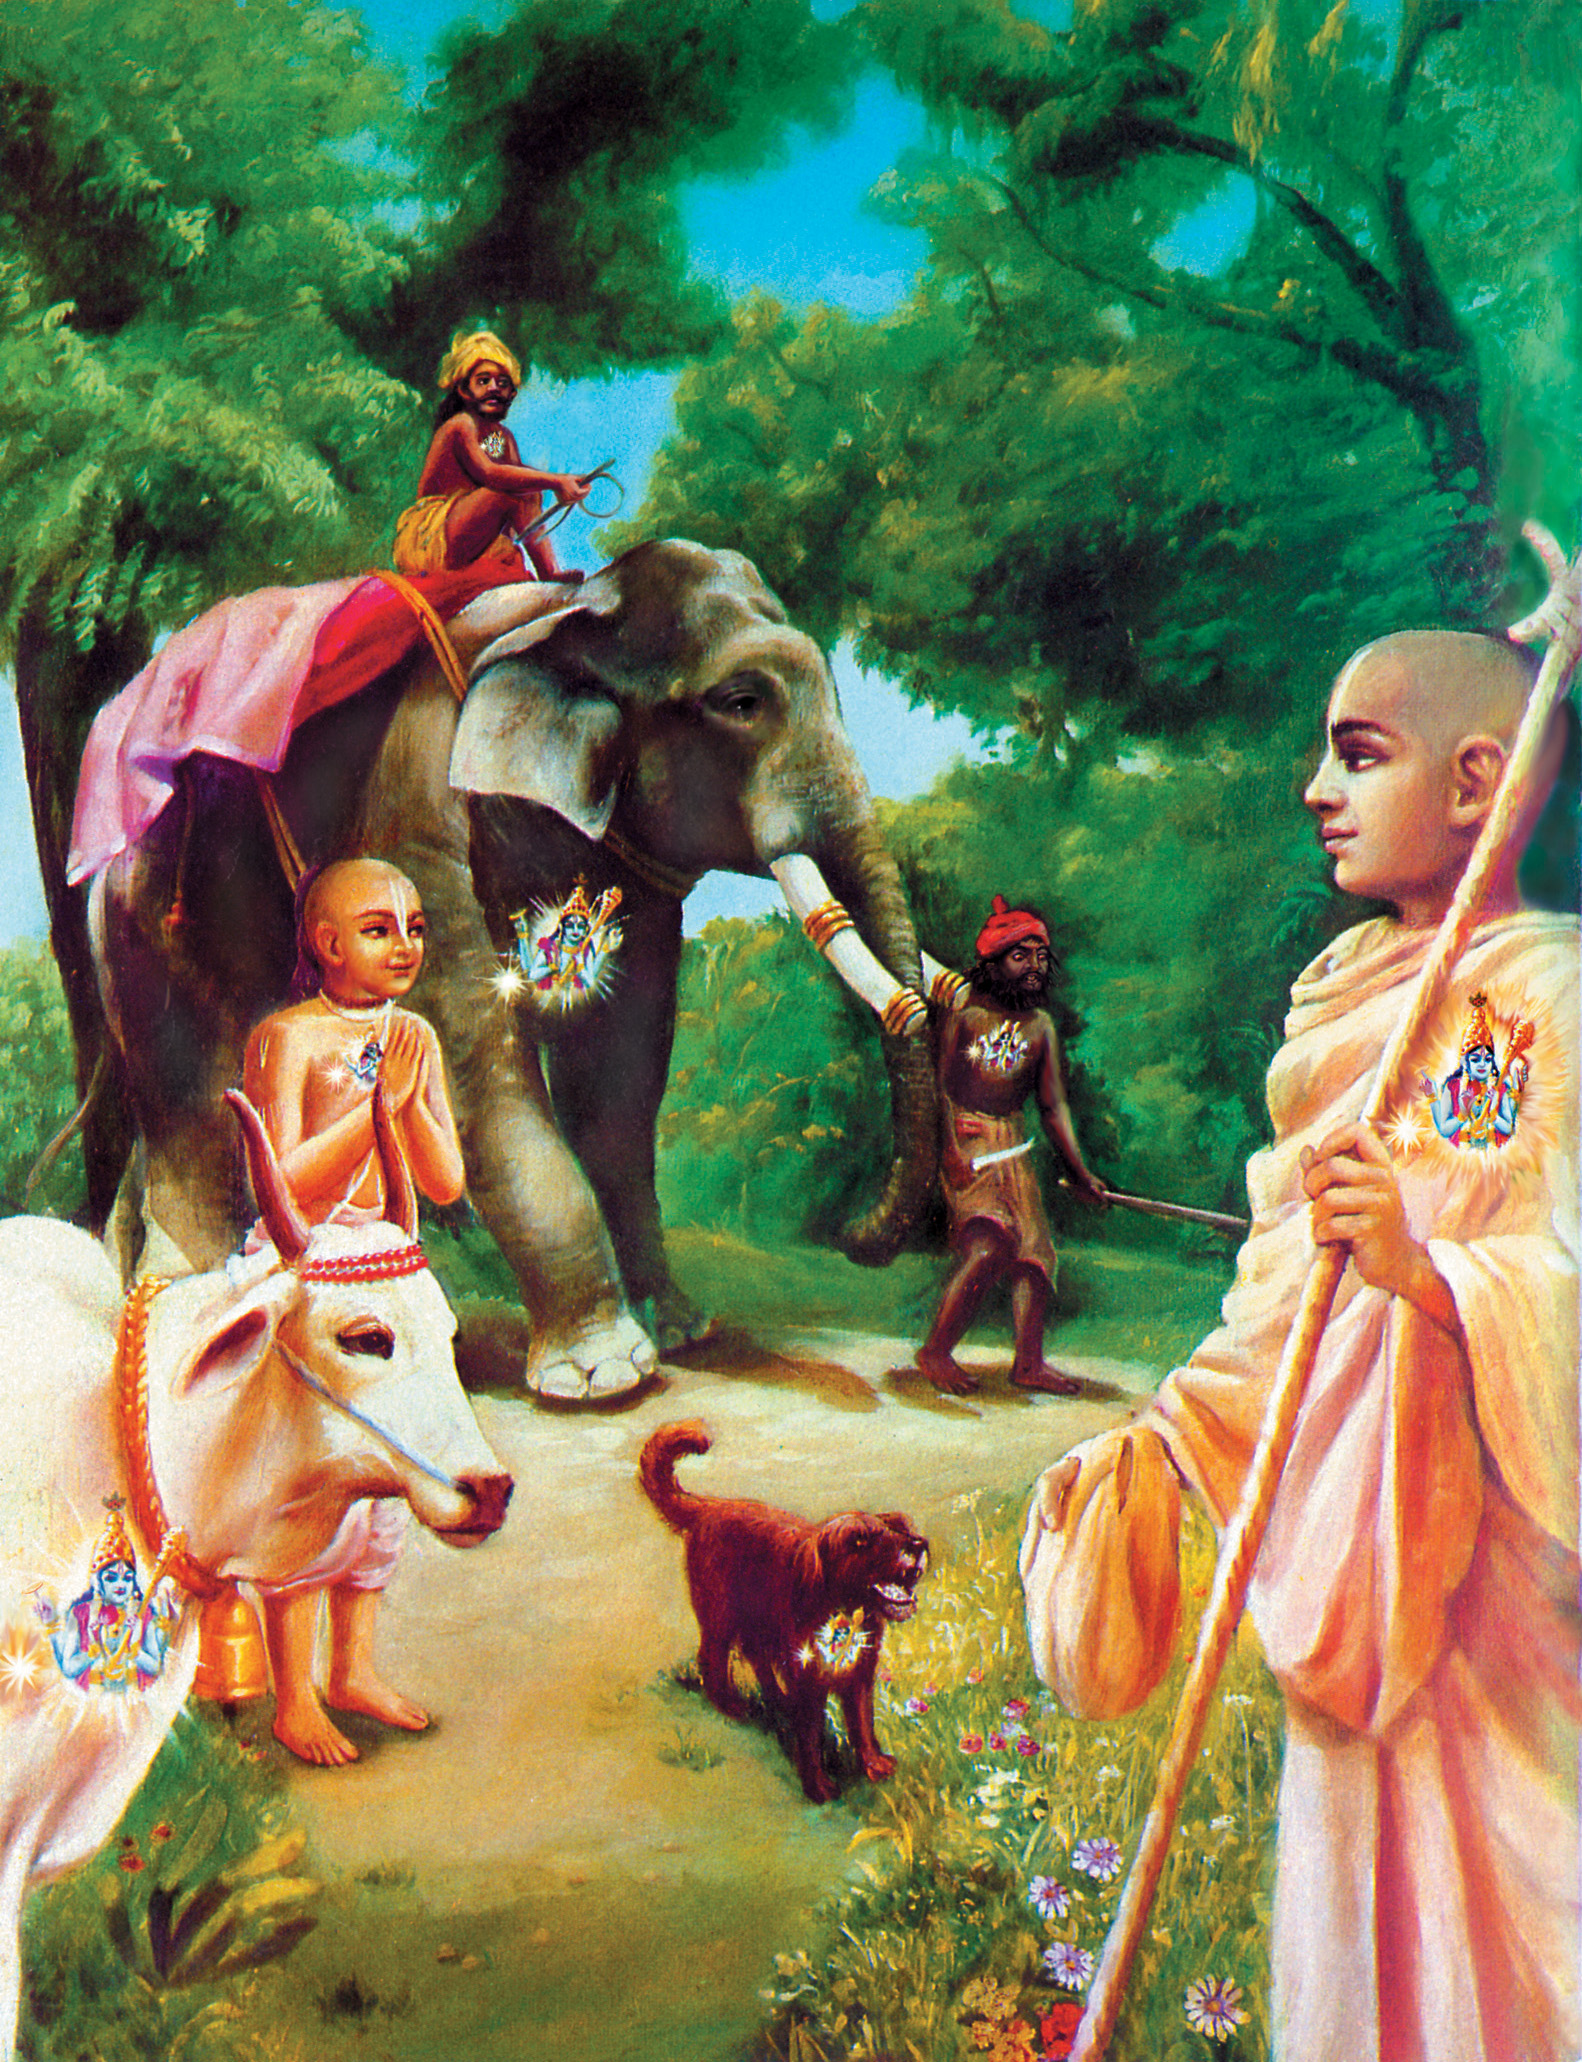 Bhagavad Gita: The humble sage sees with equal vision.